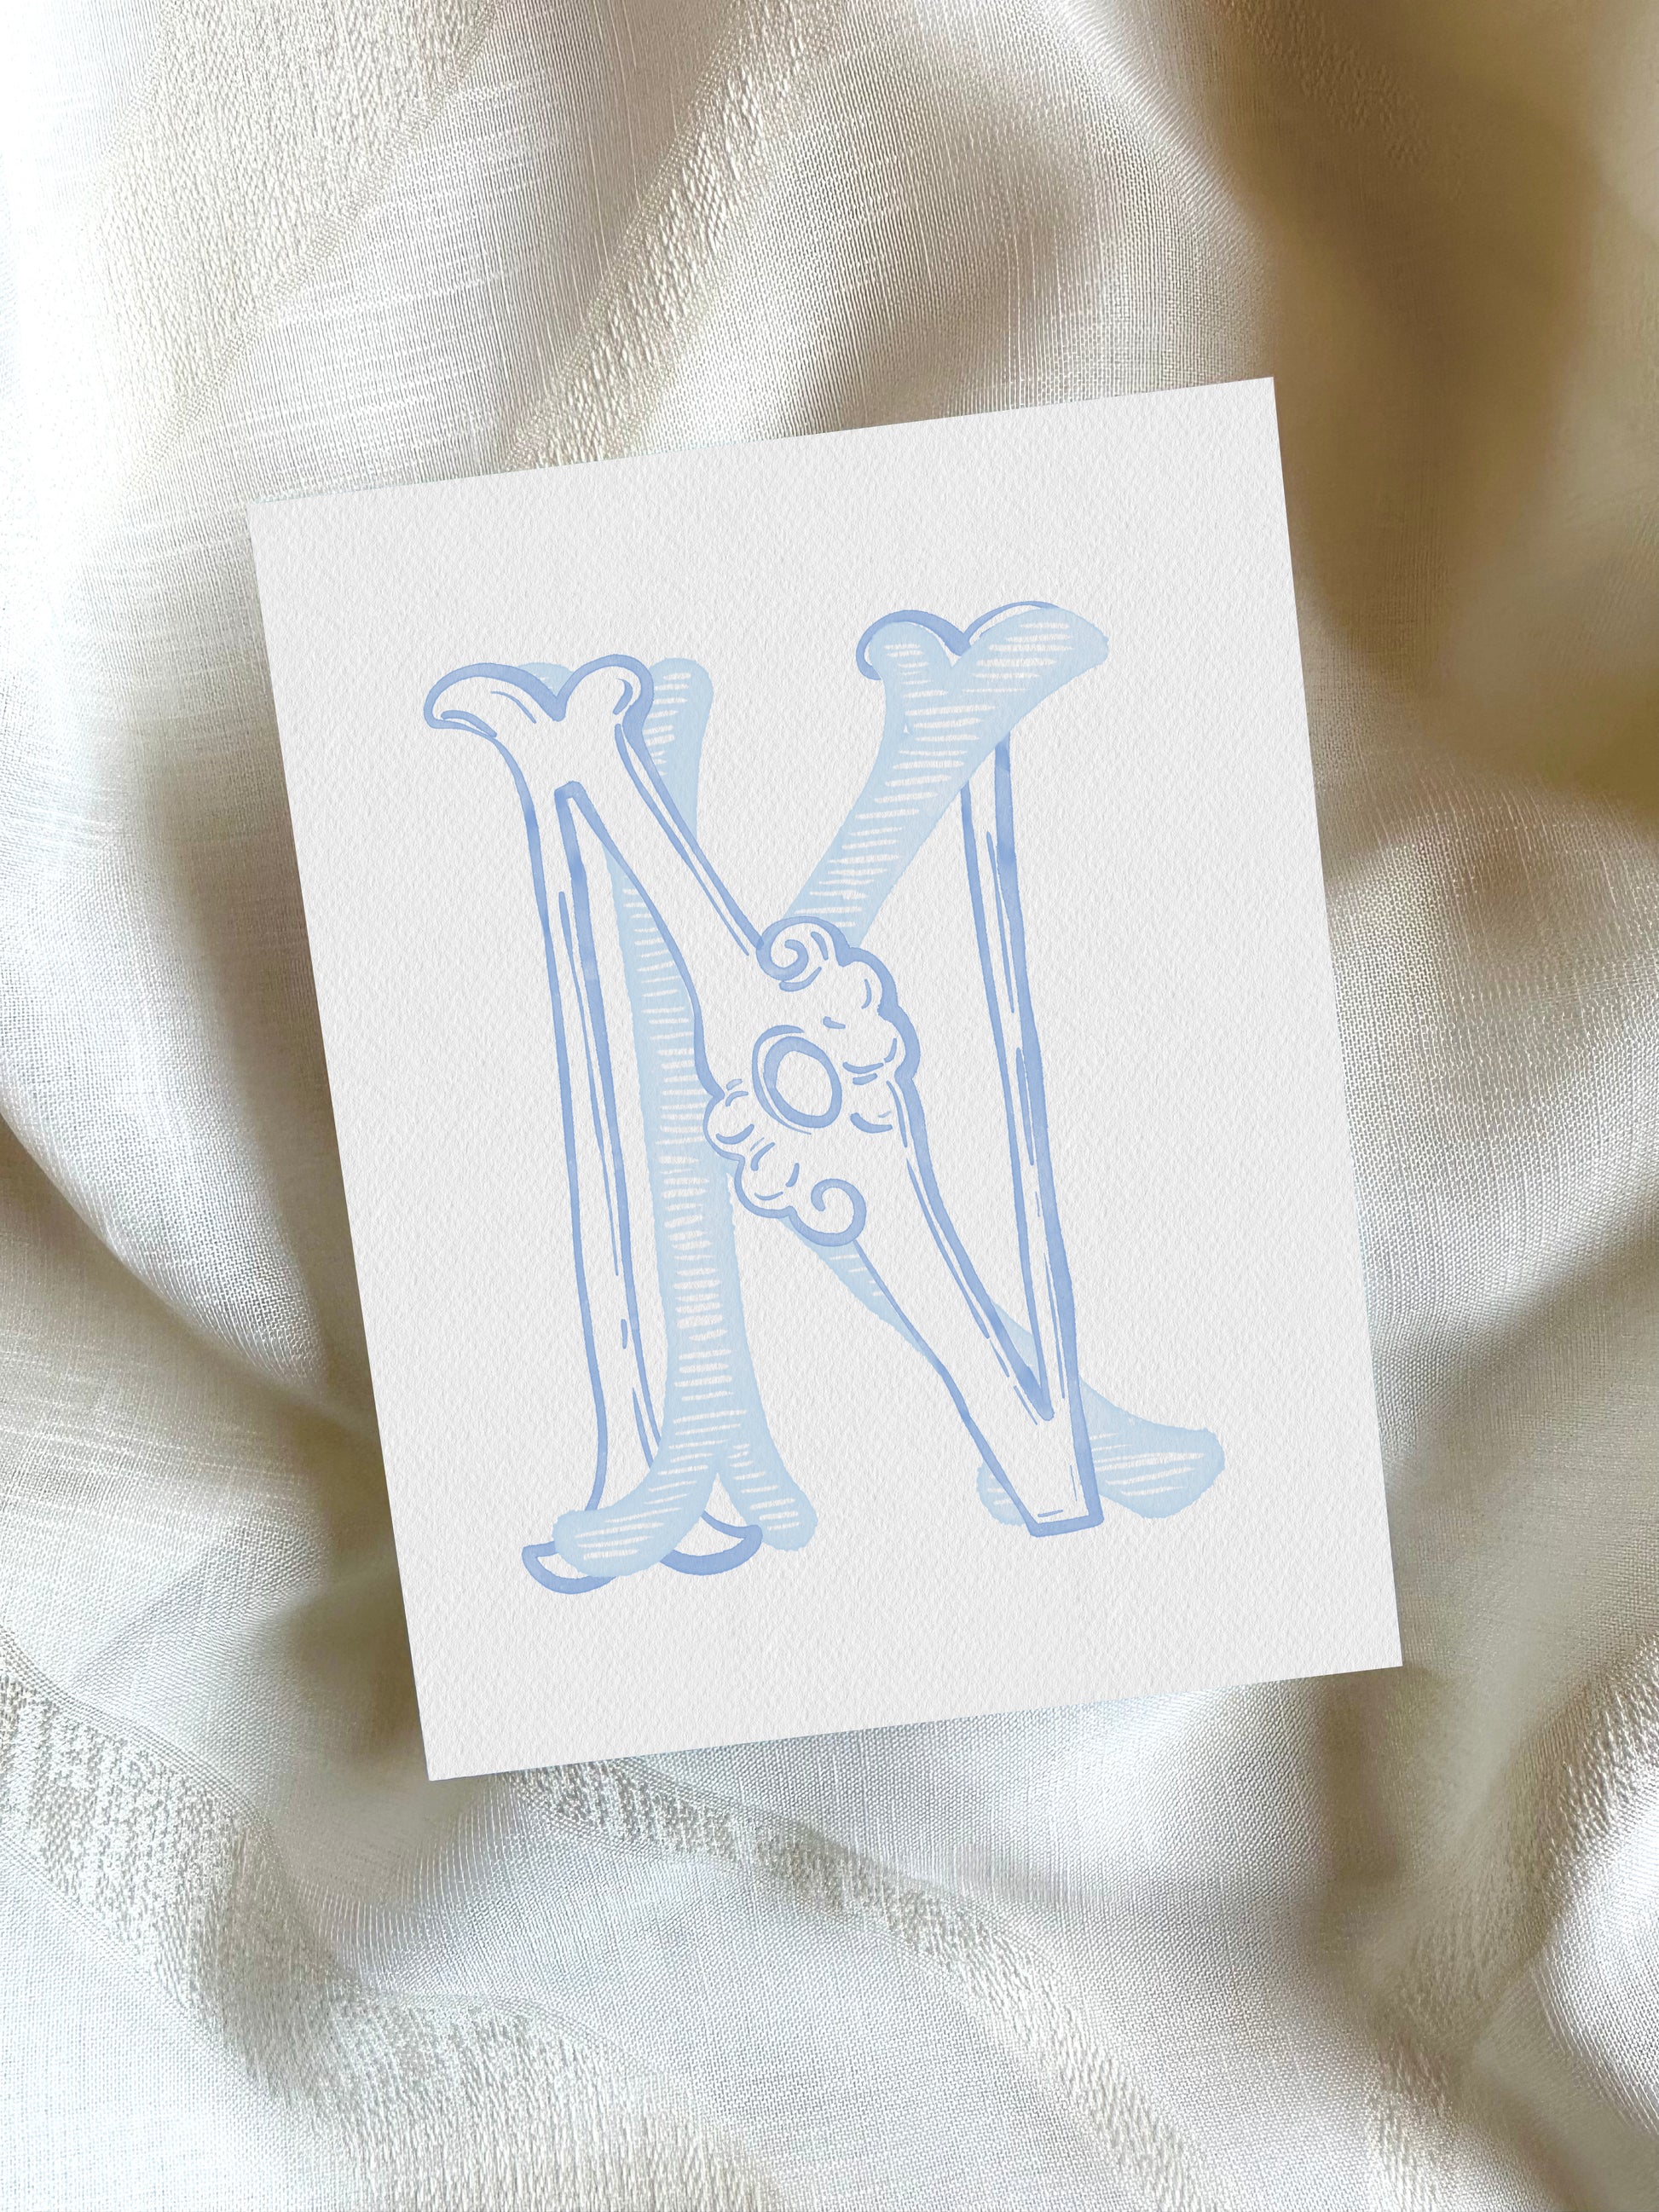 2 Letter Monogram with Letters KN NK | Digital Download - Wedding Monogram SVG, Personal Logo, Wedding Logo for Wedding Invitations The Wedding Crest Lab